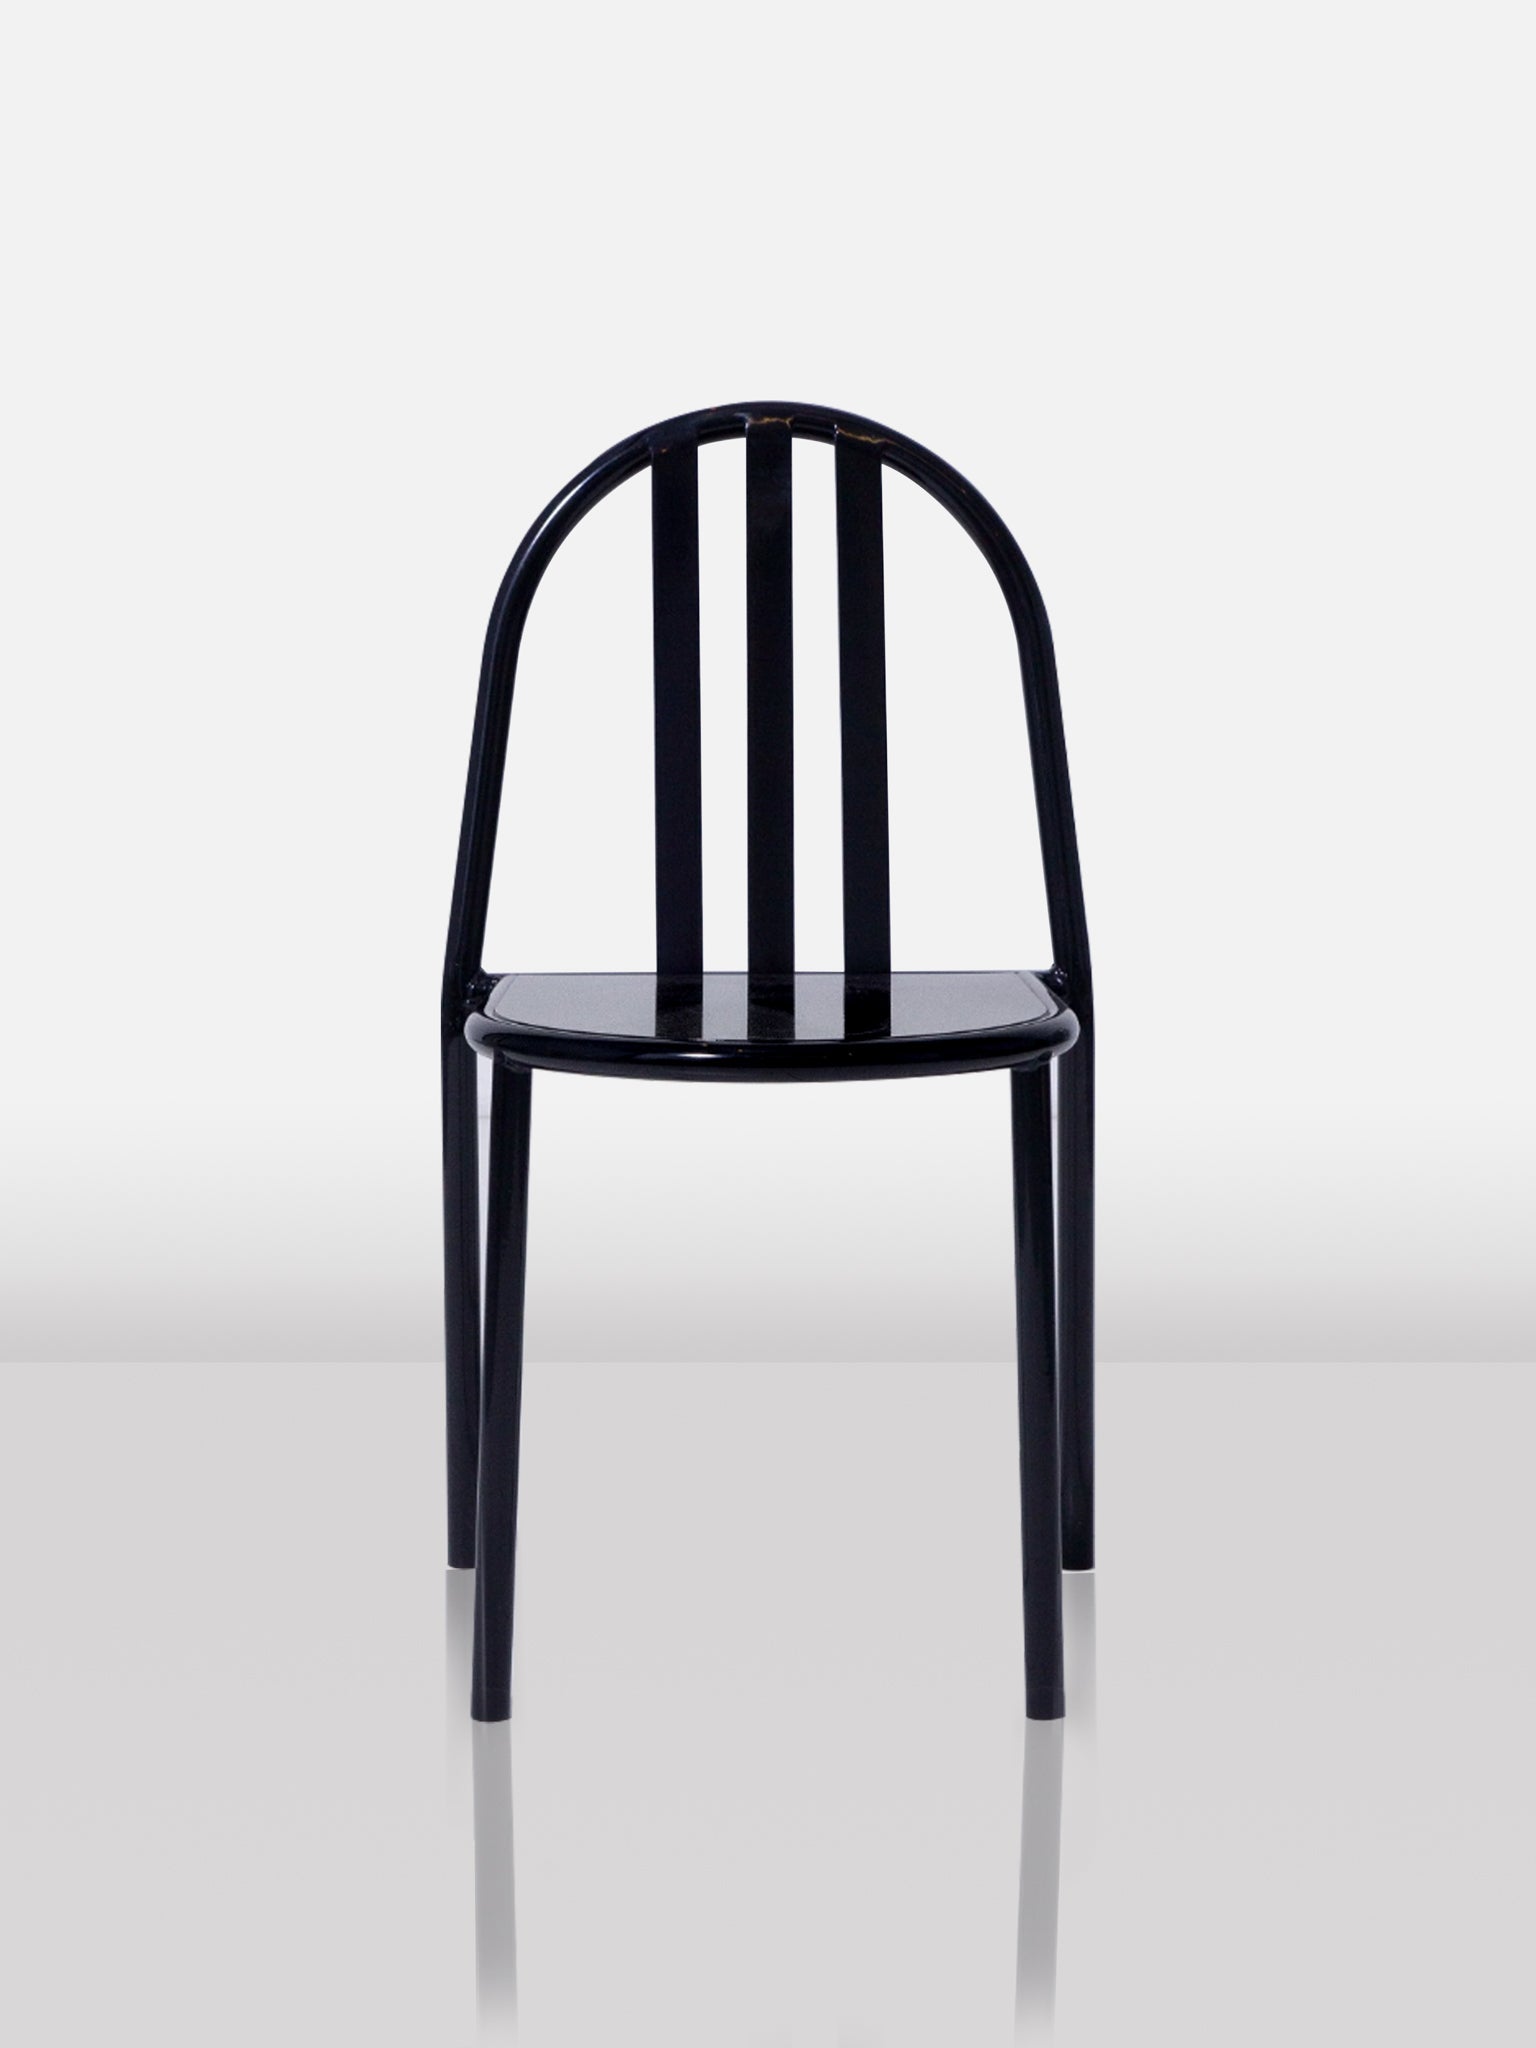 Model 222 Chairs - Black - Full Set